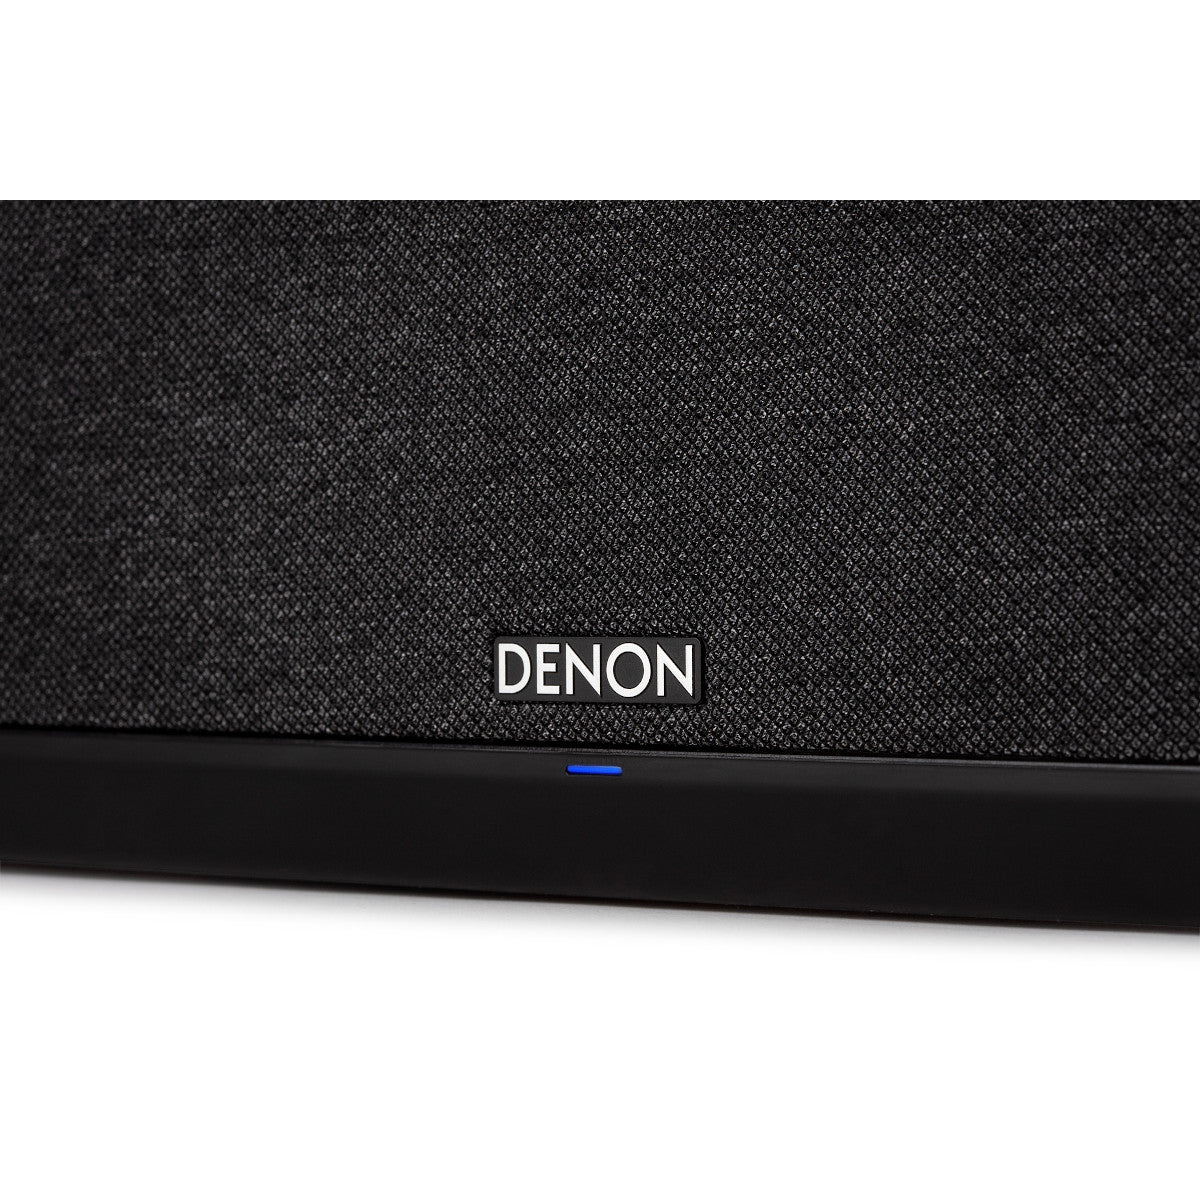 Denon Home 350 Wireless Streaming Speaker (Factory Certified Refurbished, Black) - Pair